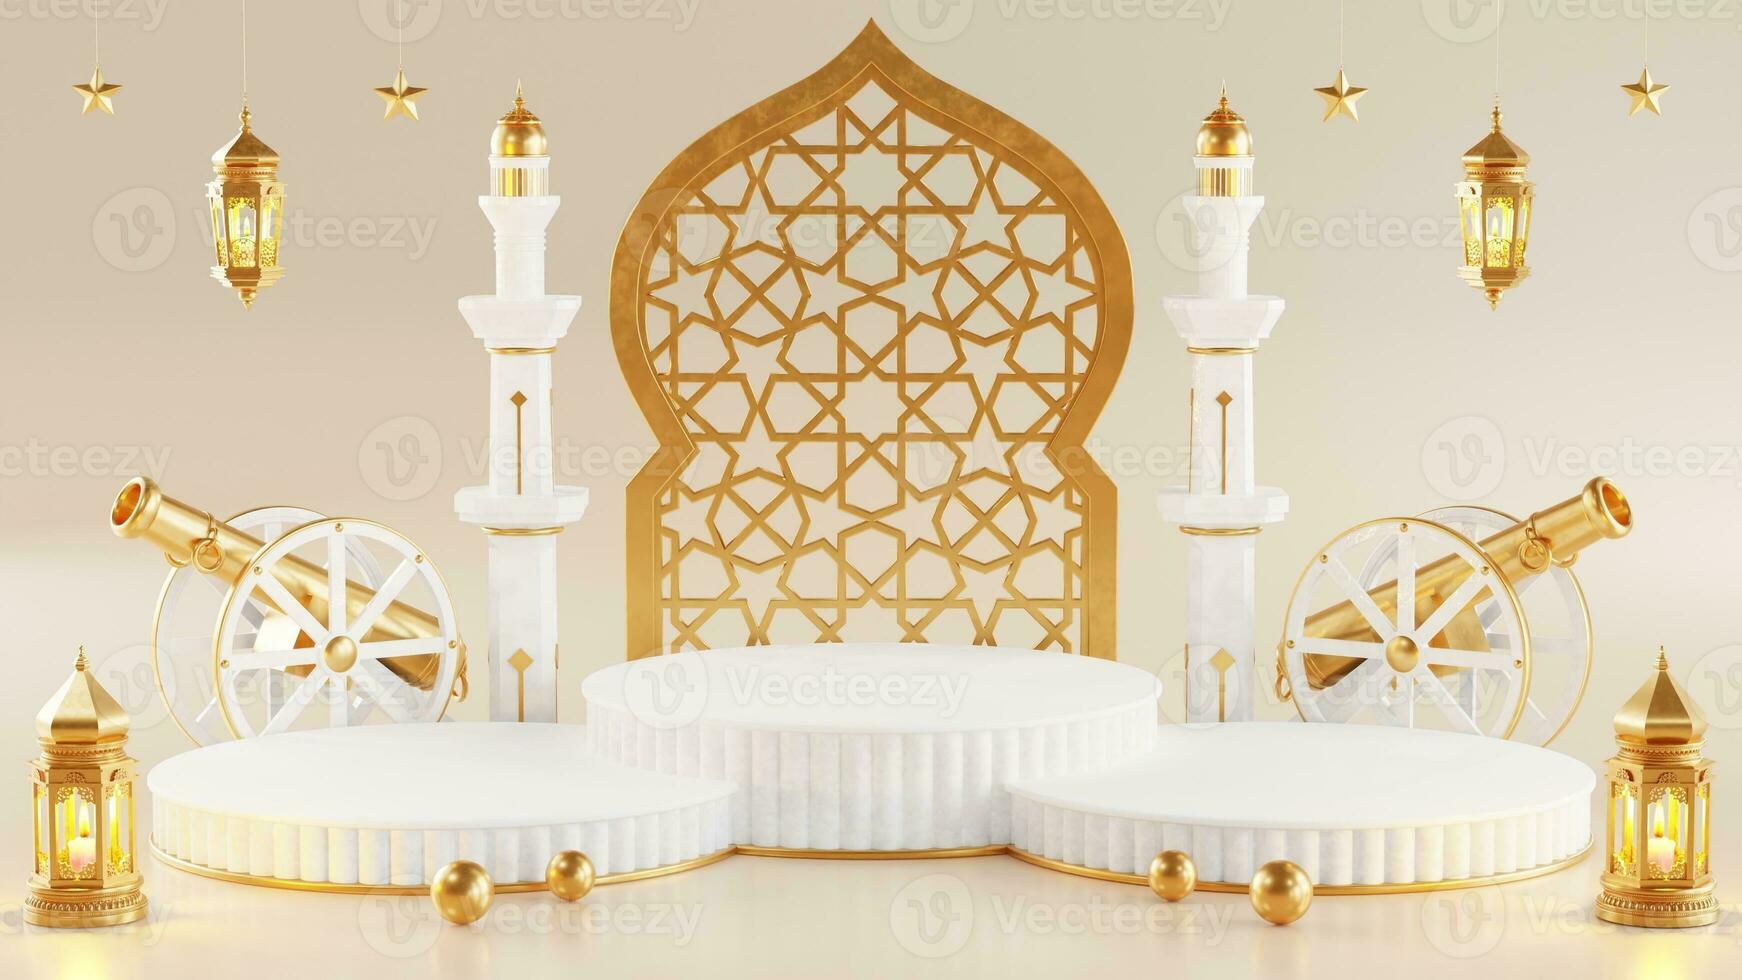 3d Ramadan Kareem podium with golden moon star and lantern, mosque door islamic pattern, arabic coffee pot, date palm fruit, podium as luxury islamic background. decoration for ramadan kareem. photo